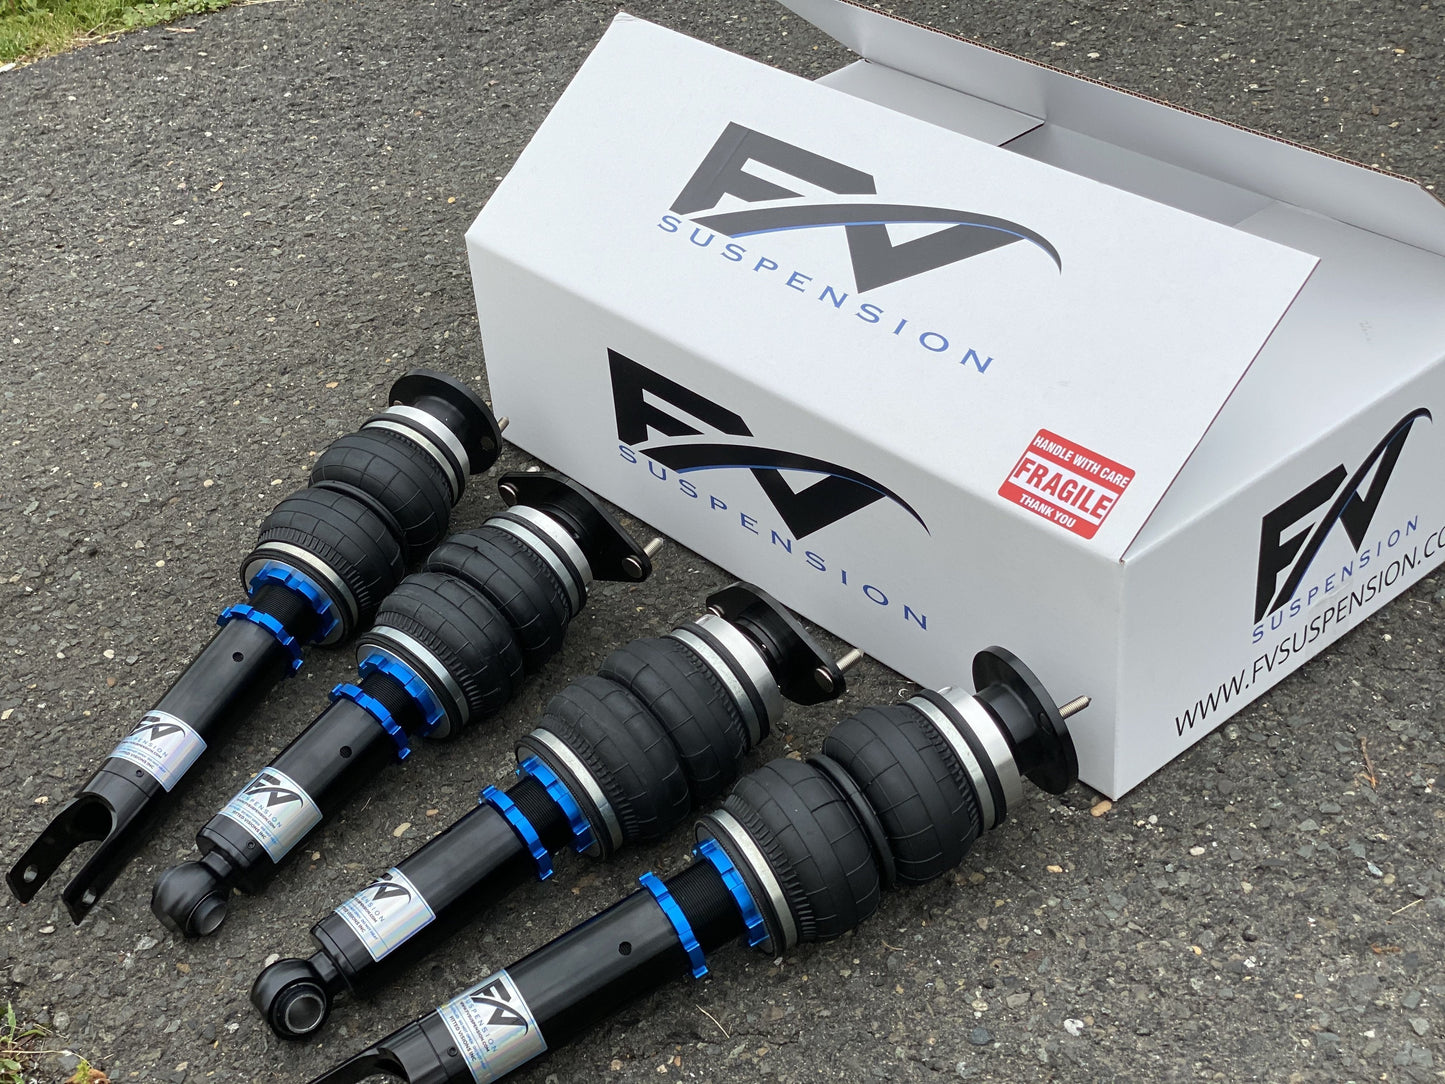 FV Suspension Tier 1 Budget kit Complete Air Ride kit for 90-05 Acura NSX - FVALFullkit8